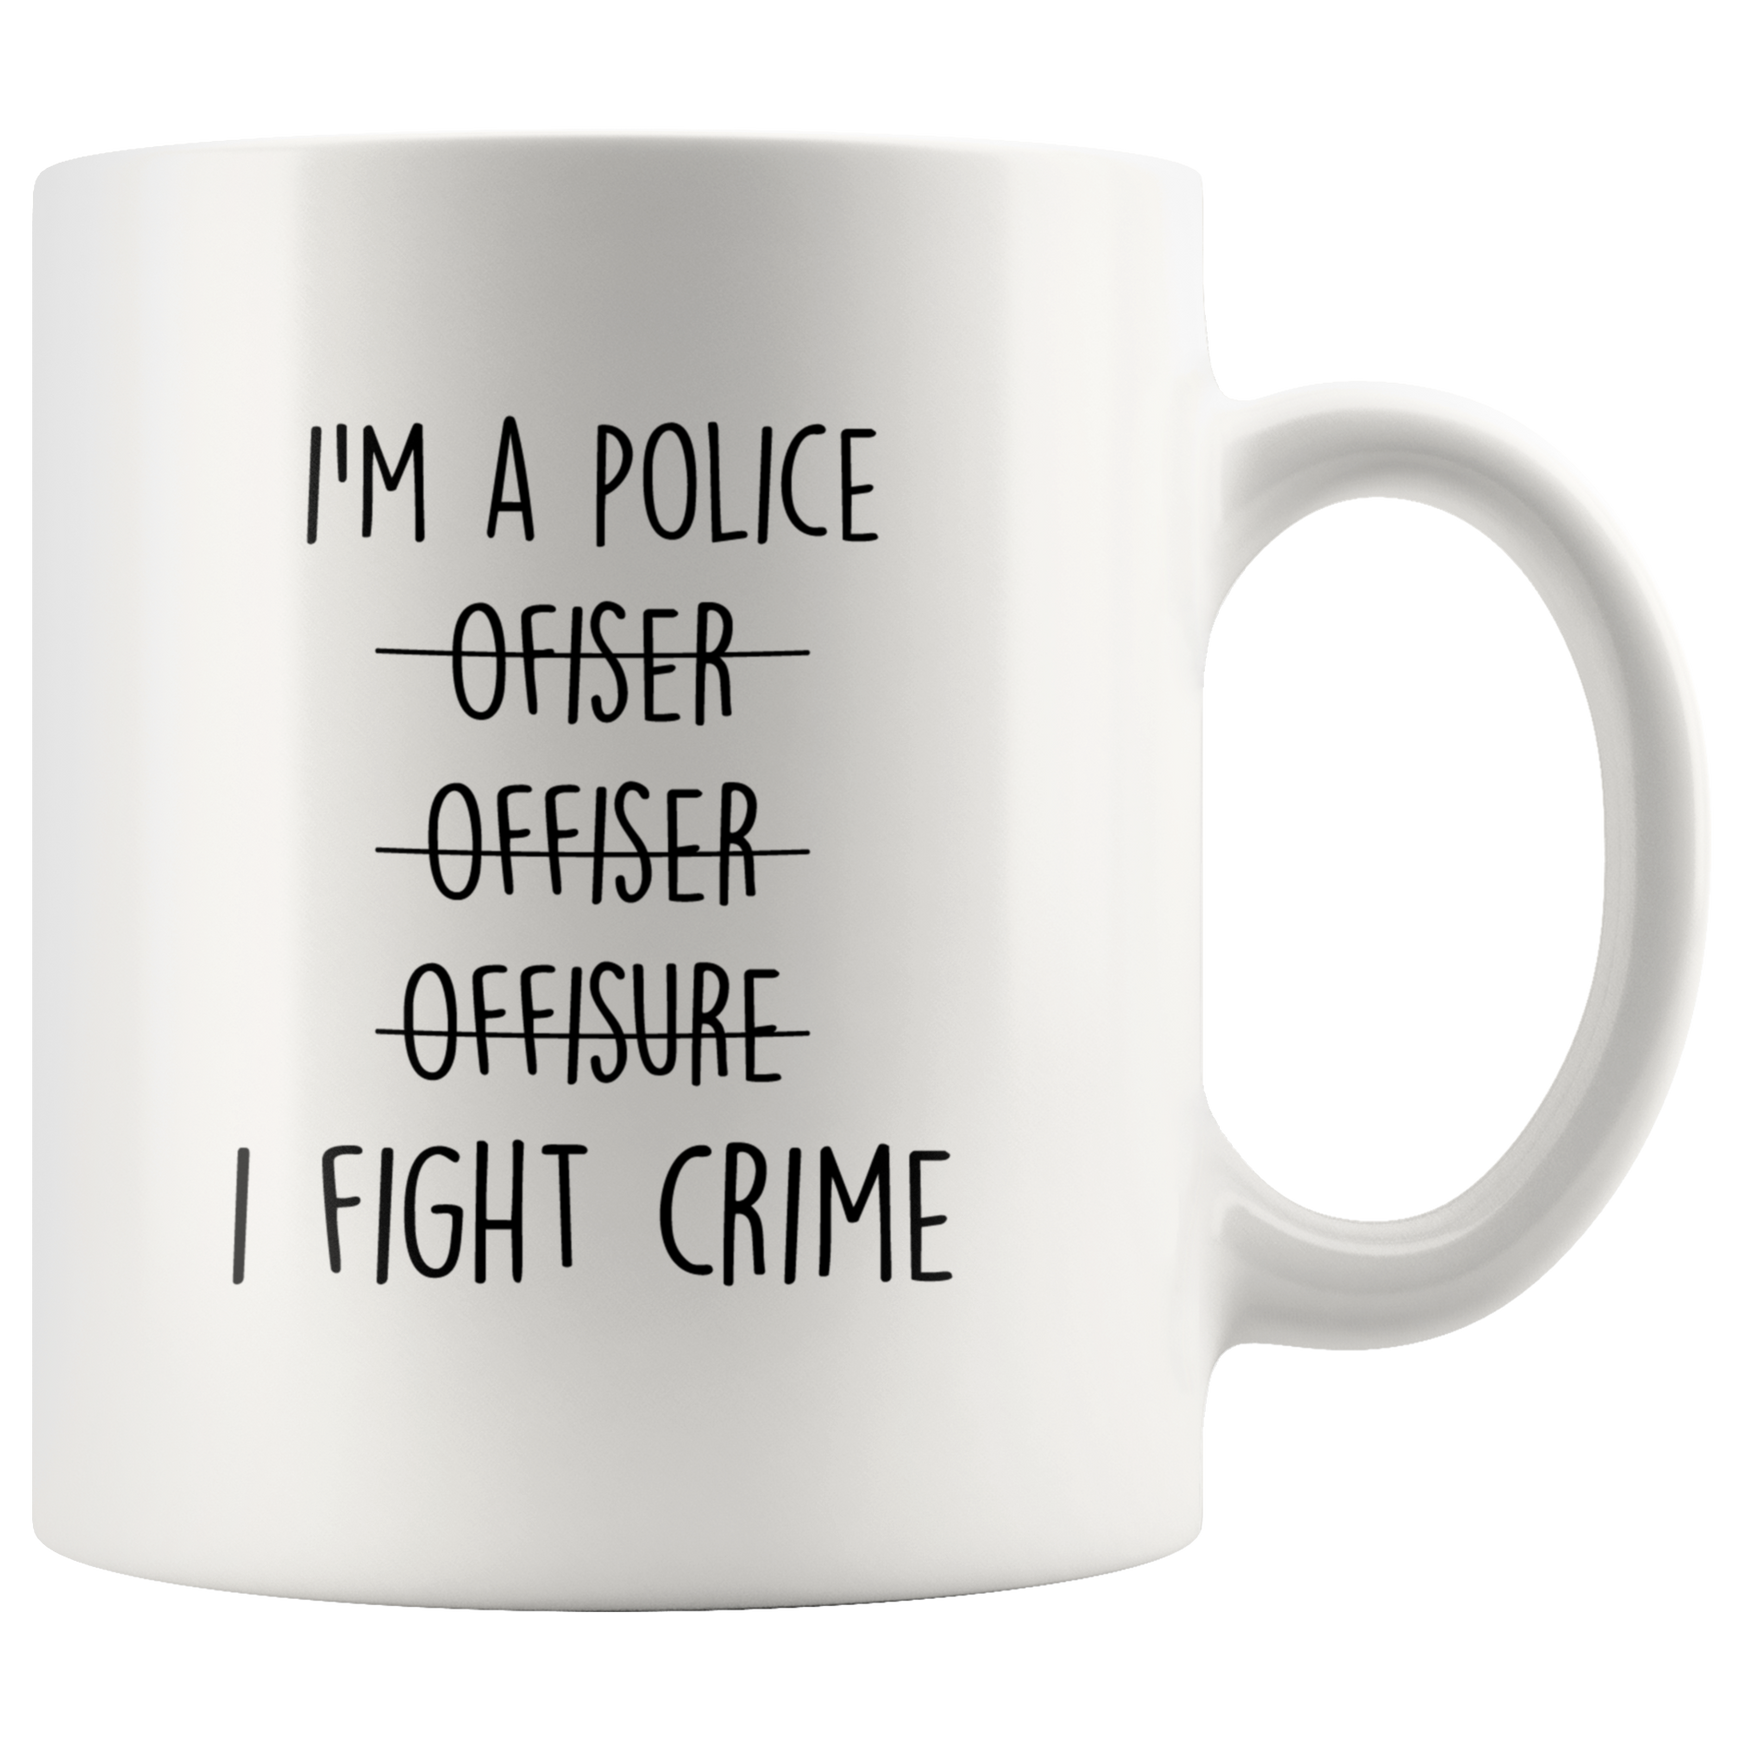 I Fight Crime Police Officer Mug